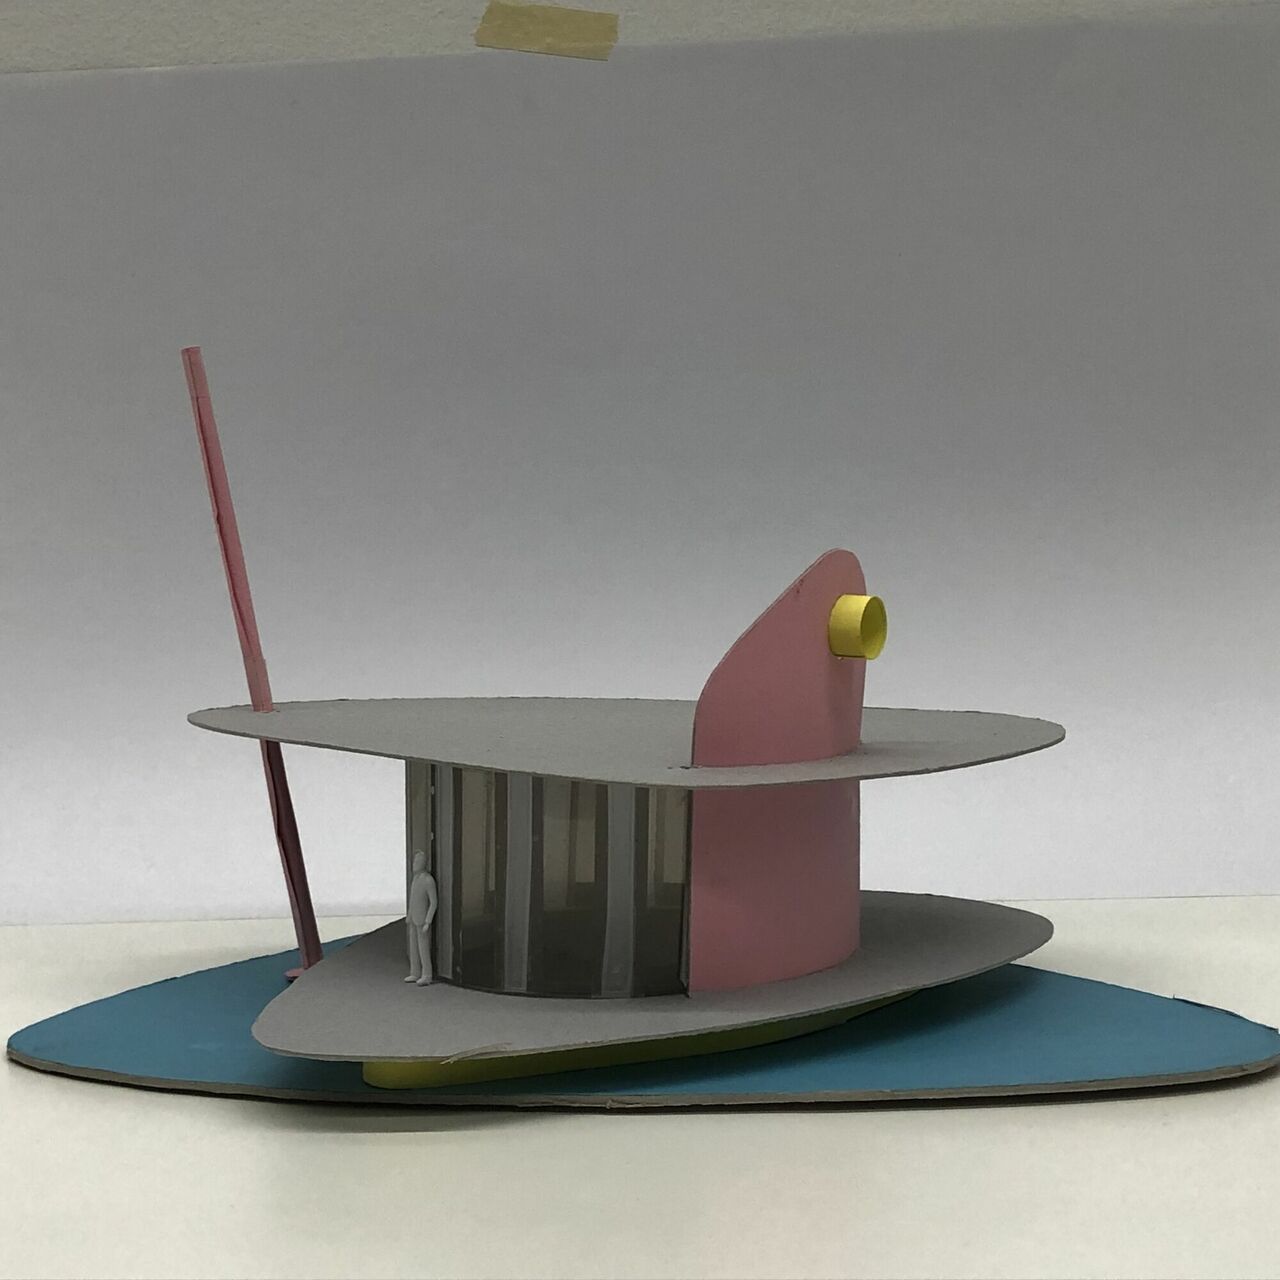 Ergebnis aus dem Workshop: Modell Pavillon